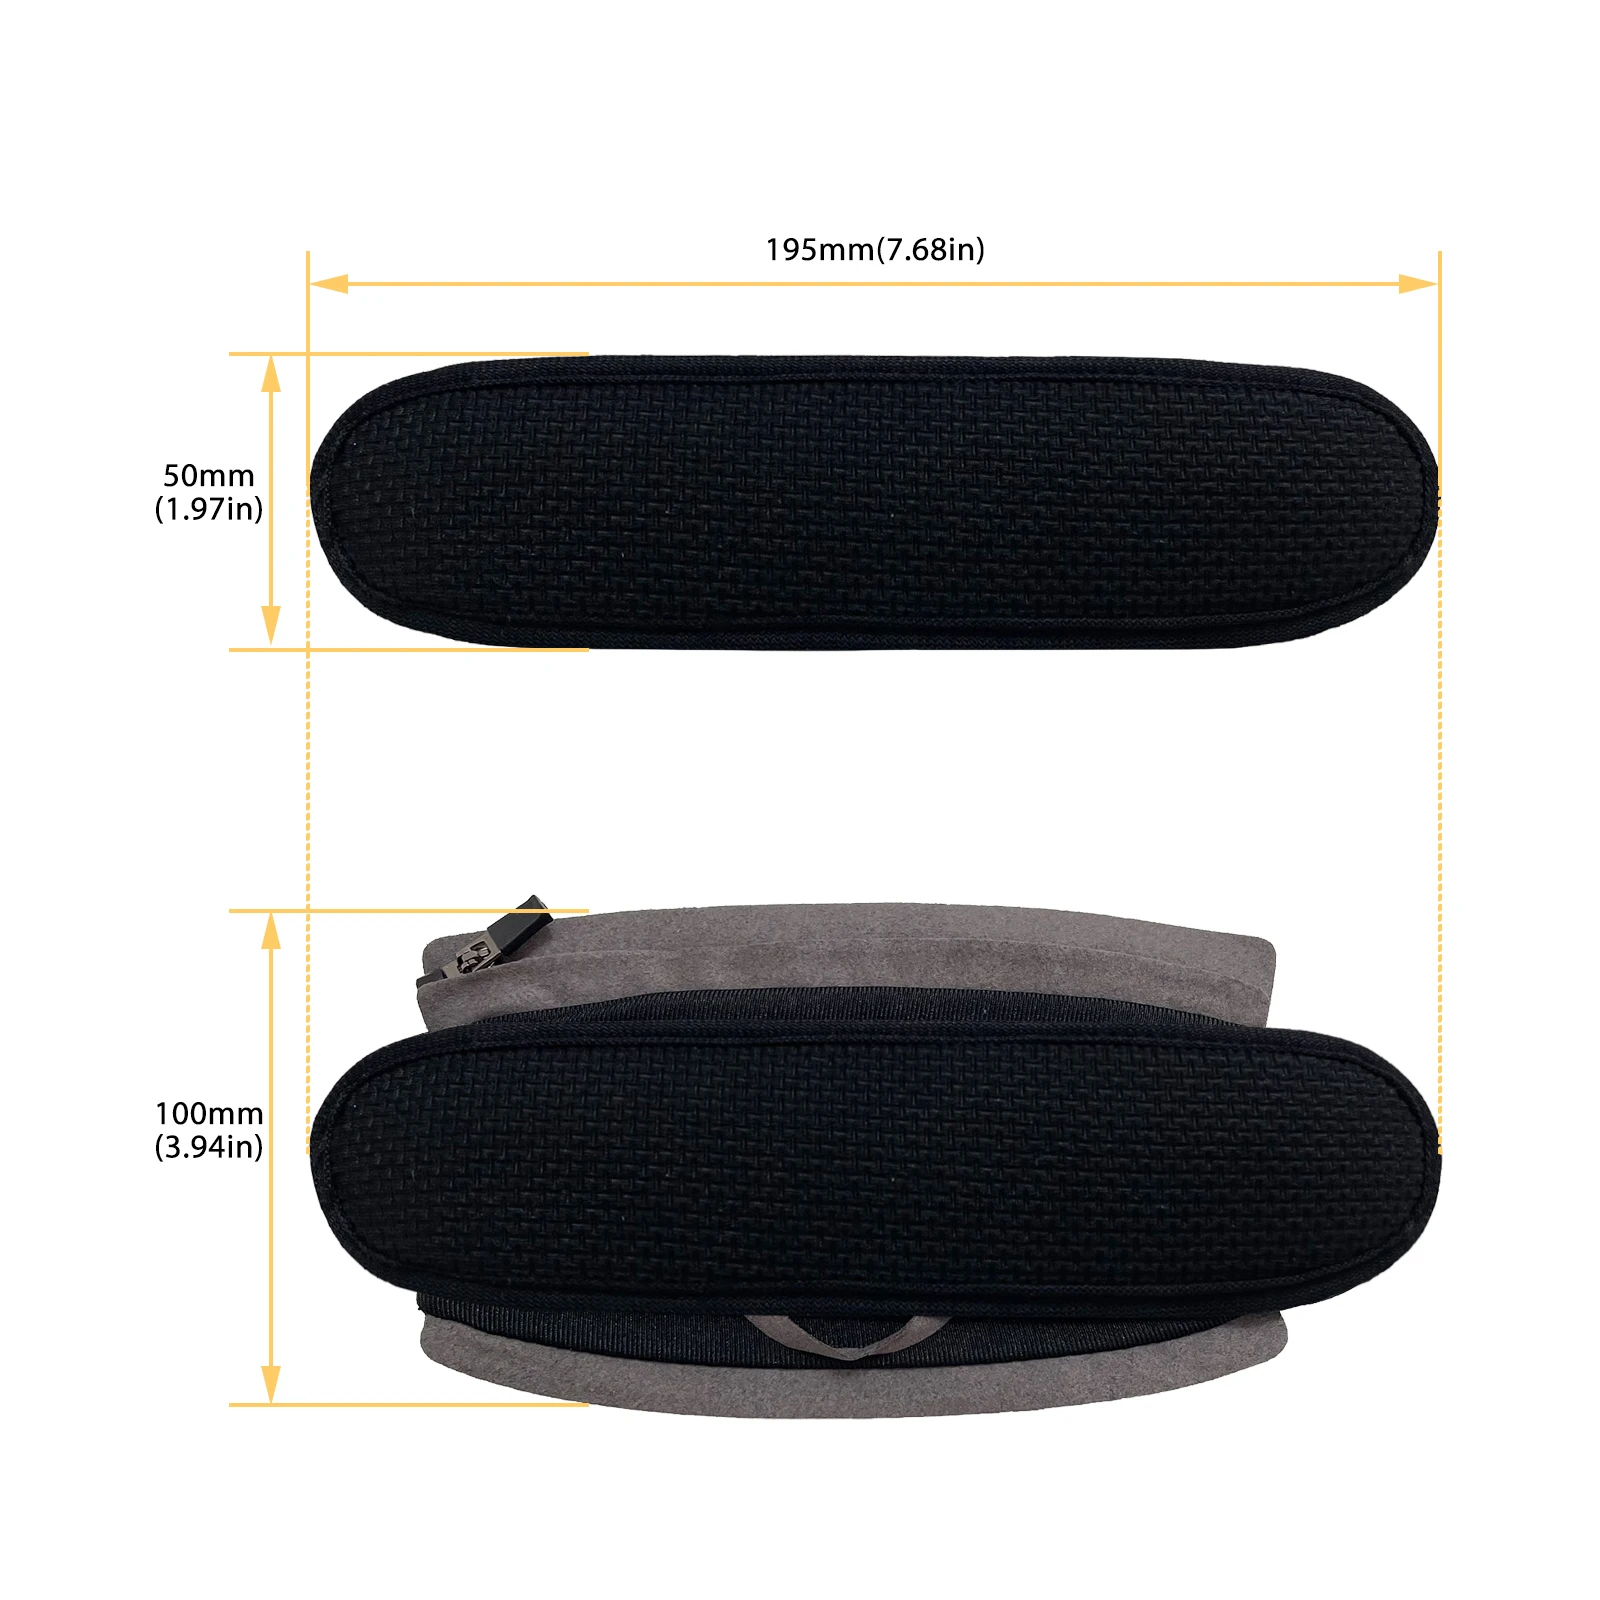 Sony Headphones Headband Replacement  Sony wh1000xm2 diadema CUBIERTA DE  LA PU-Aliexpress